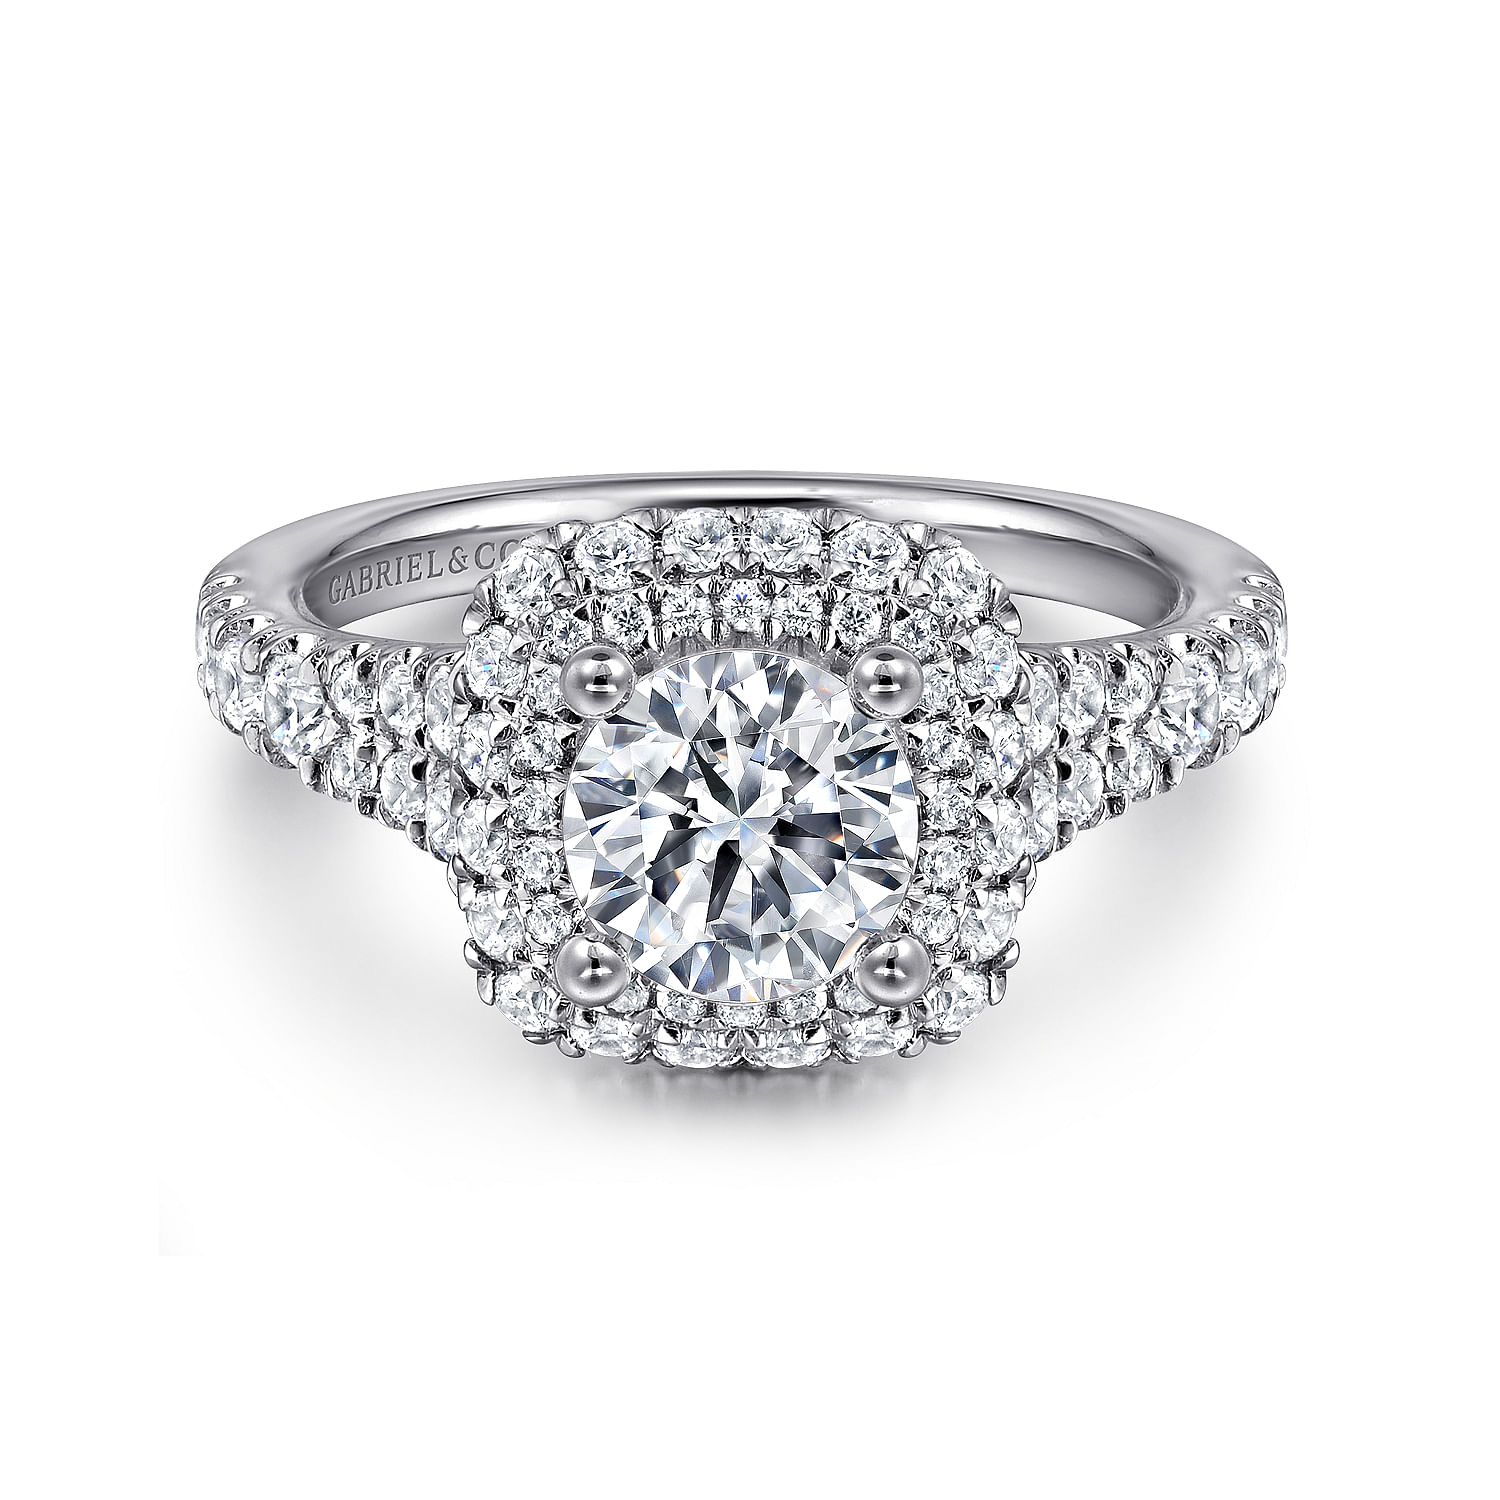 Sequoia - 14K White Gold Round Diamond Engagement Ring